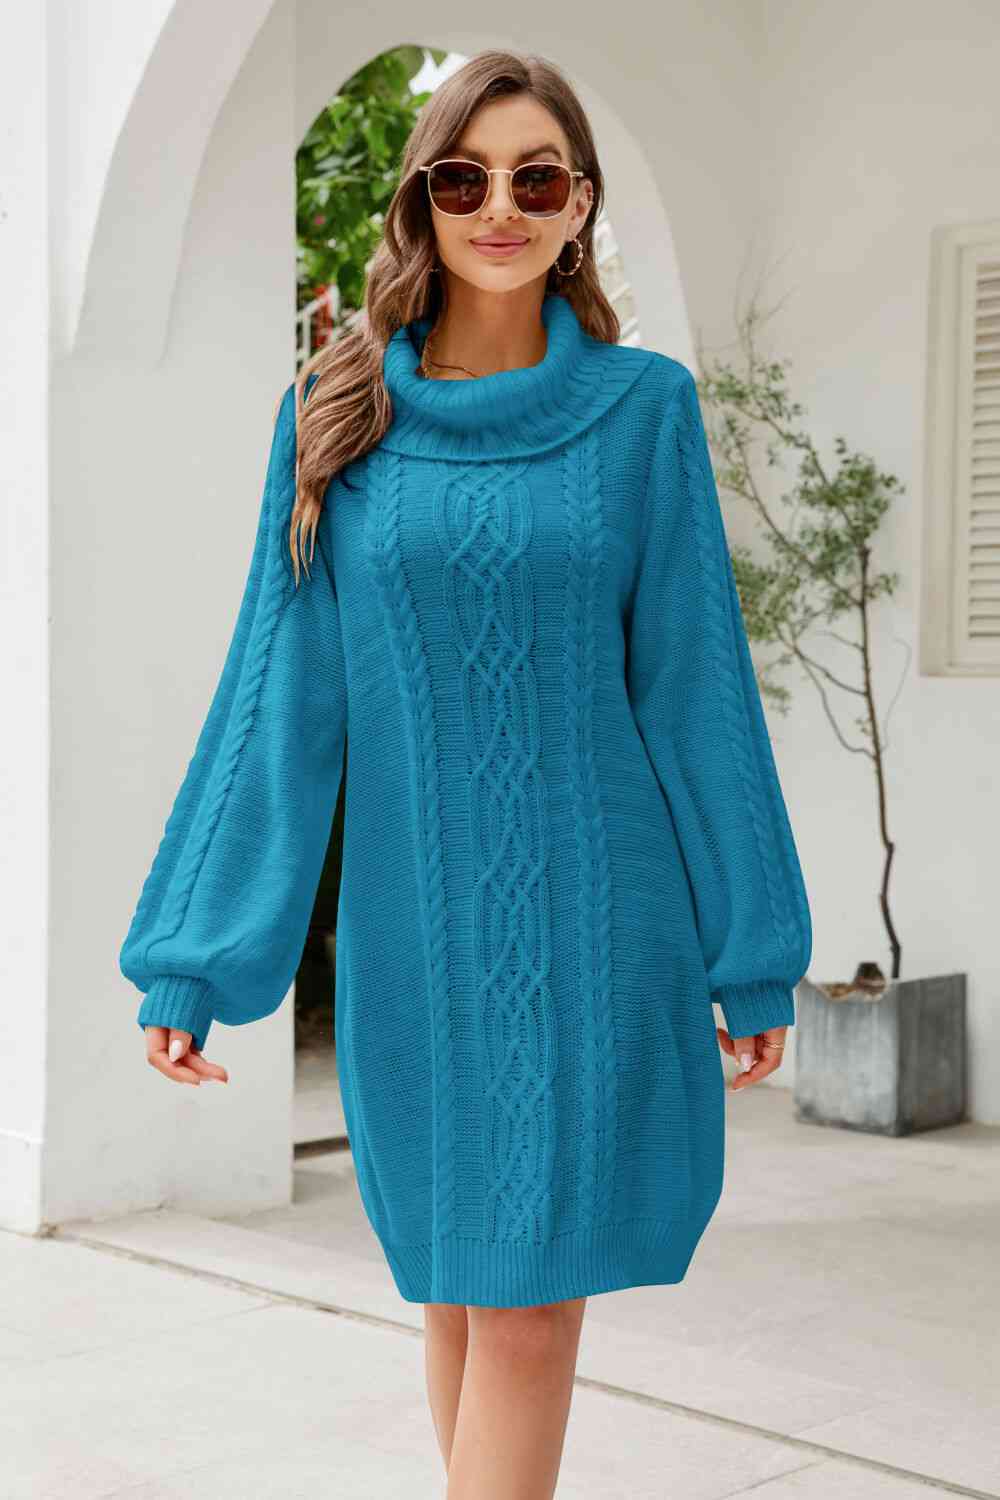 Woven Right Mixed Knit Turtleneck Lantern Sleeve Sweater Dress - Guy Christopher 